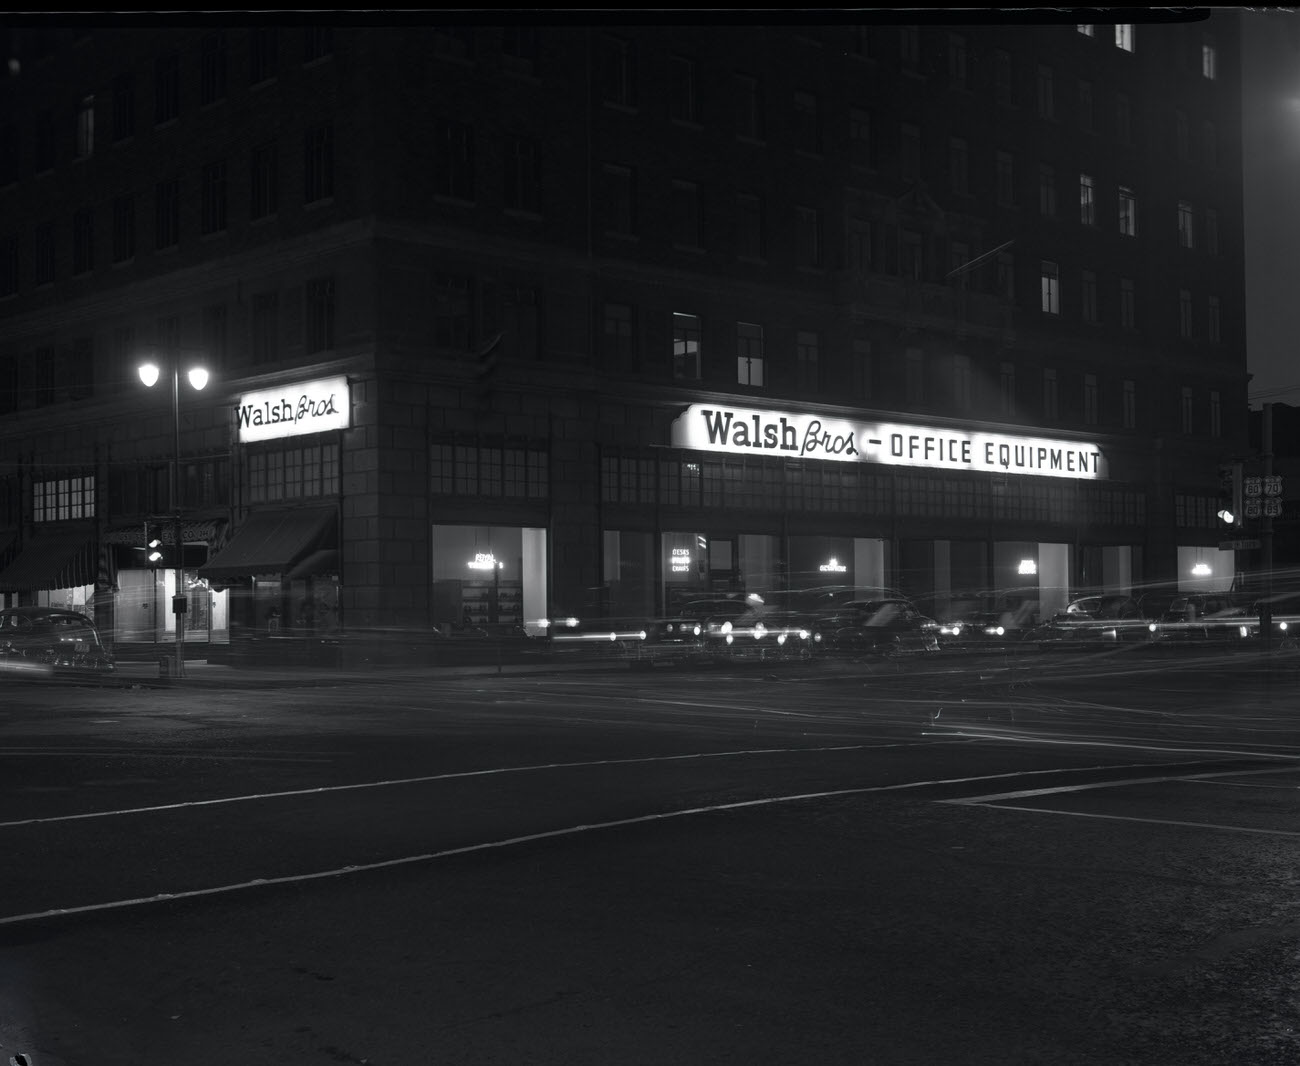 Walsh Bros. Office Equipment Sign at Night, 1942